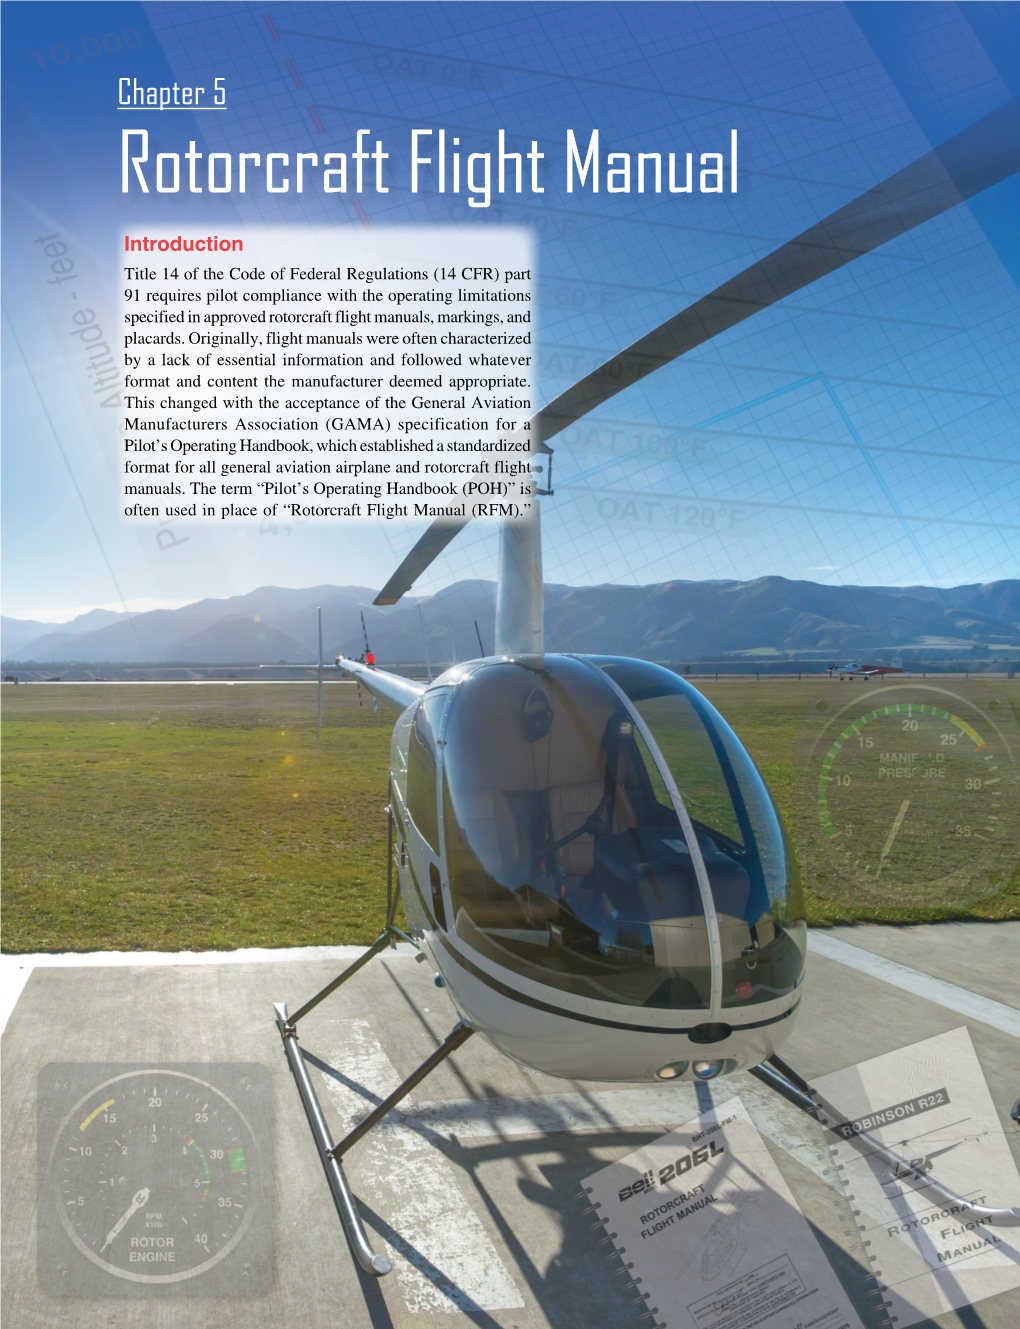 Chapter 5 Rotorcraft Flight Manual